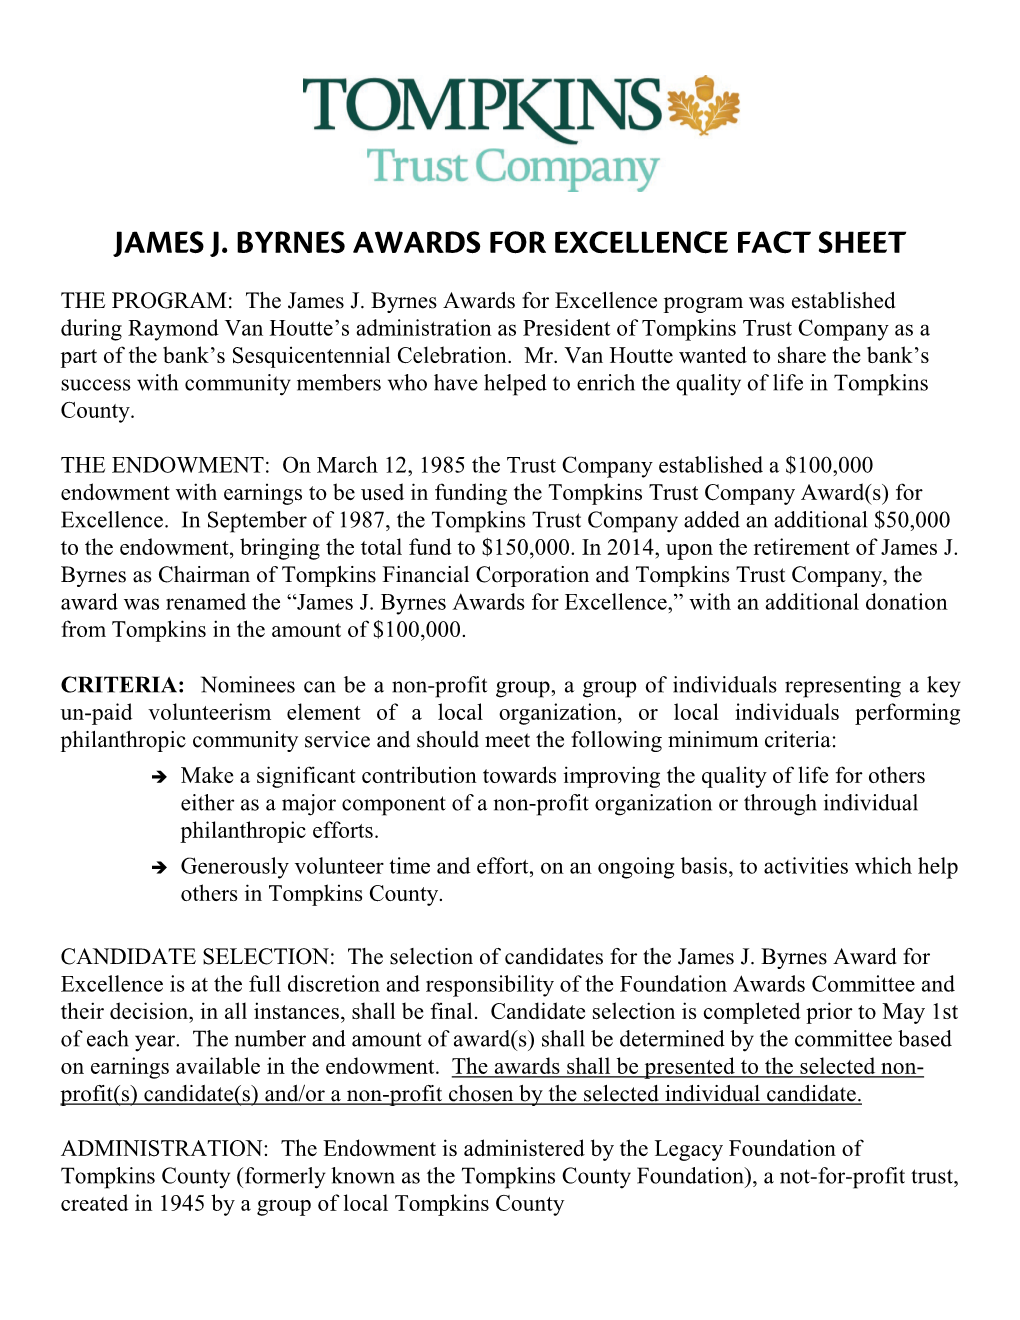 James J. Byrnes Awards for Excellence Fact Sheet